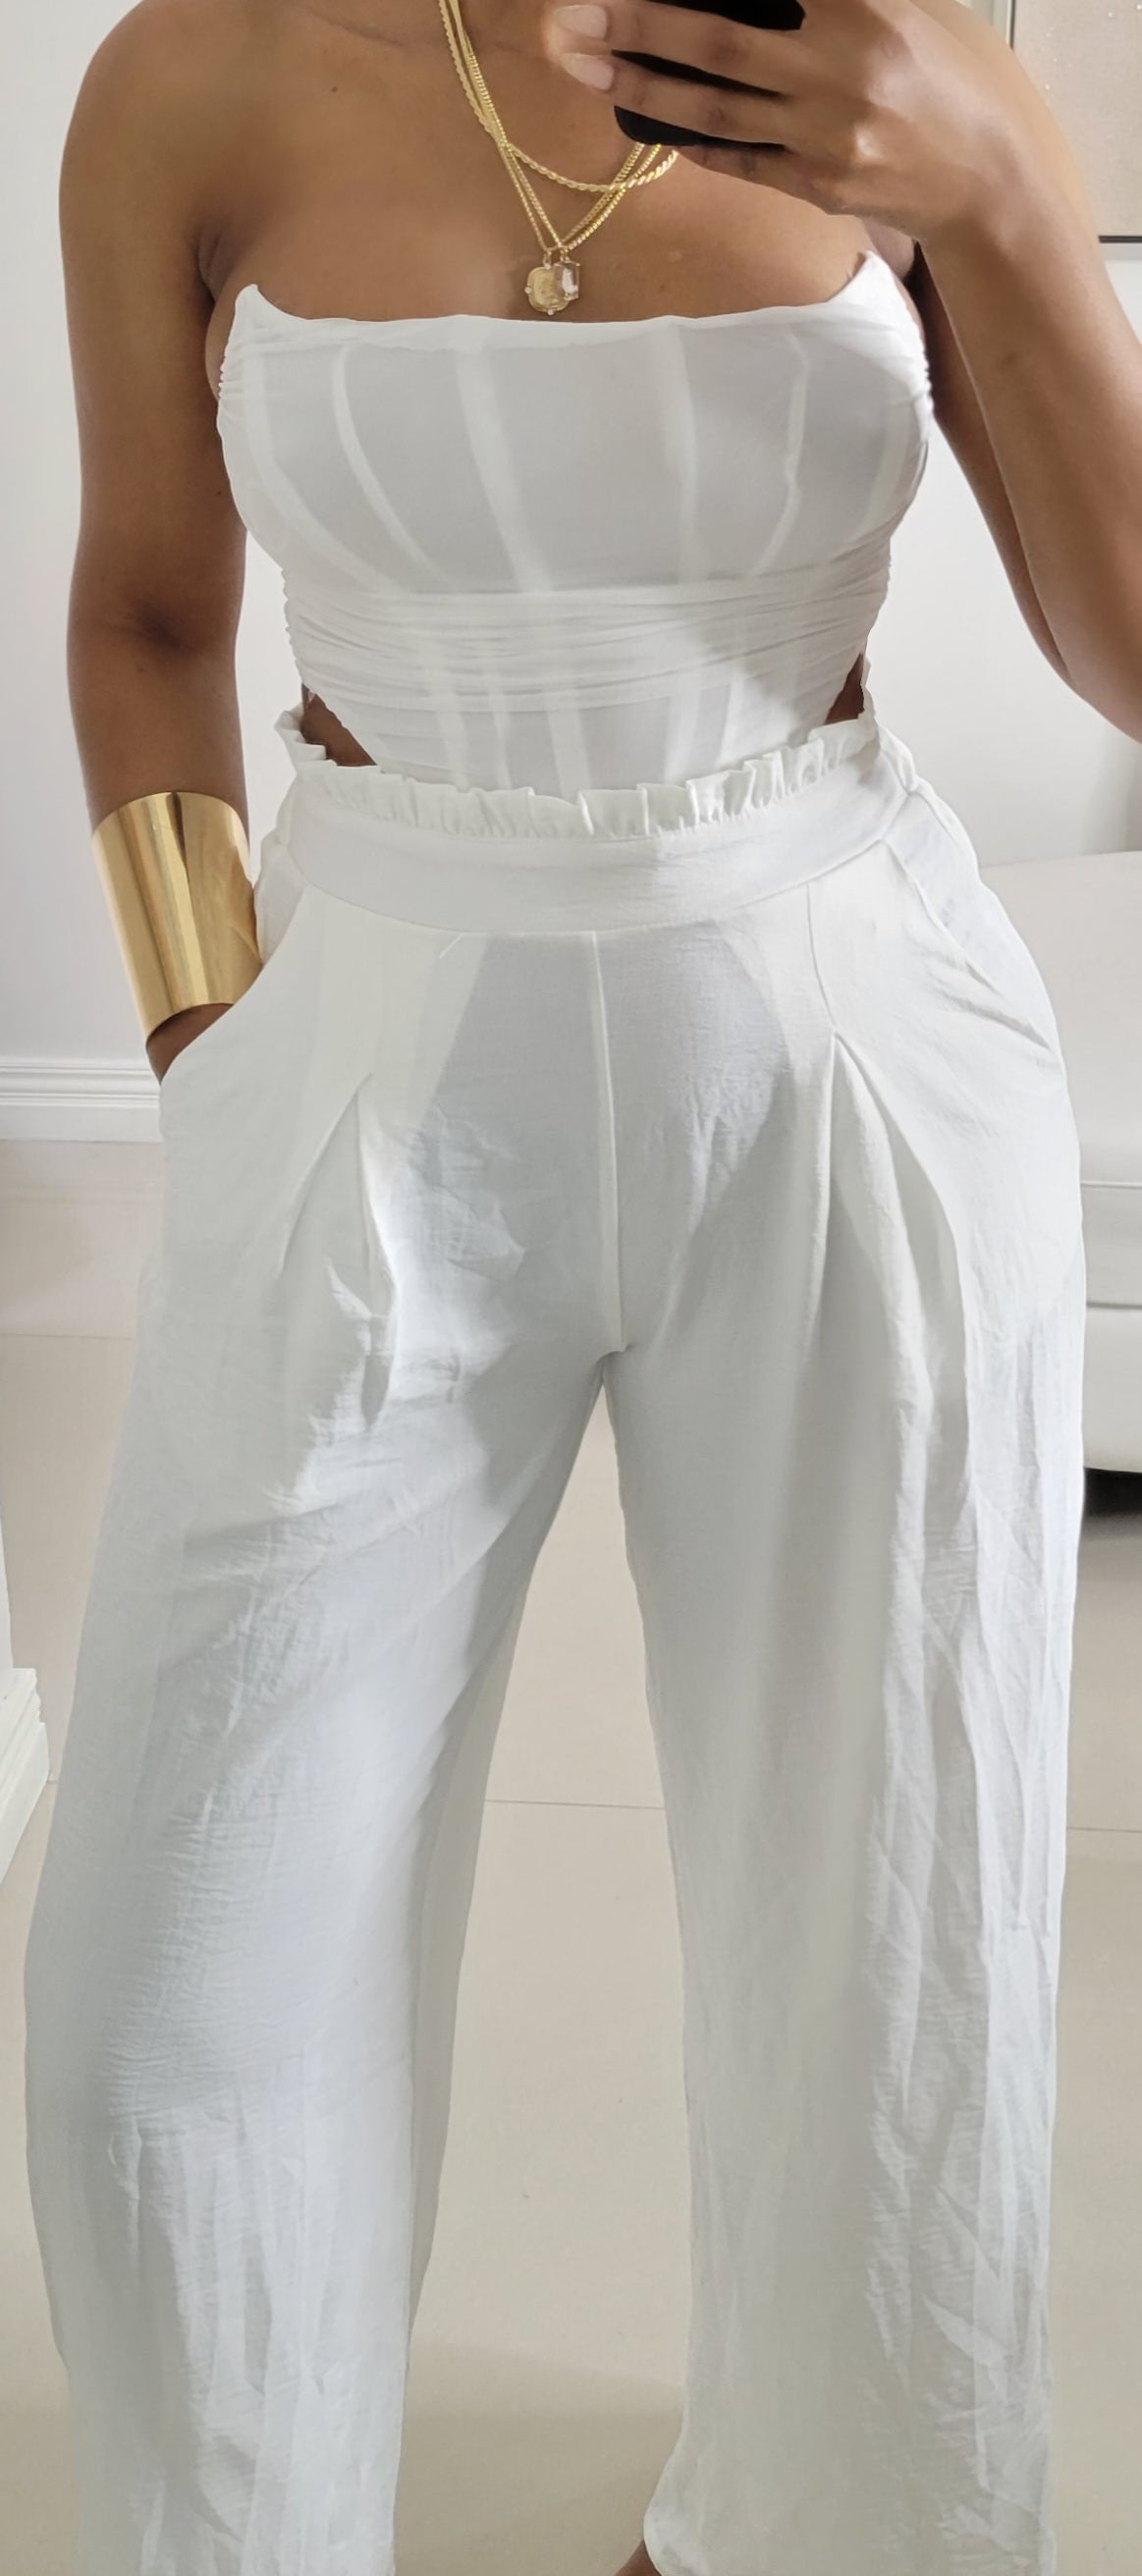 Elastic waist comfy white pants